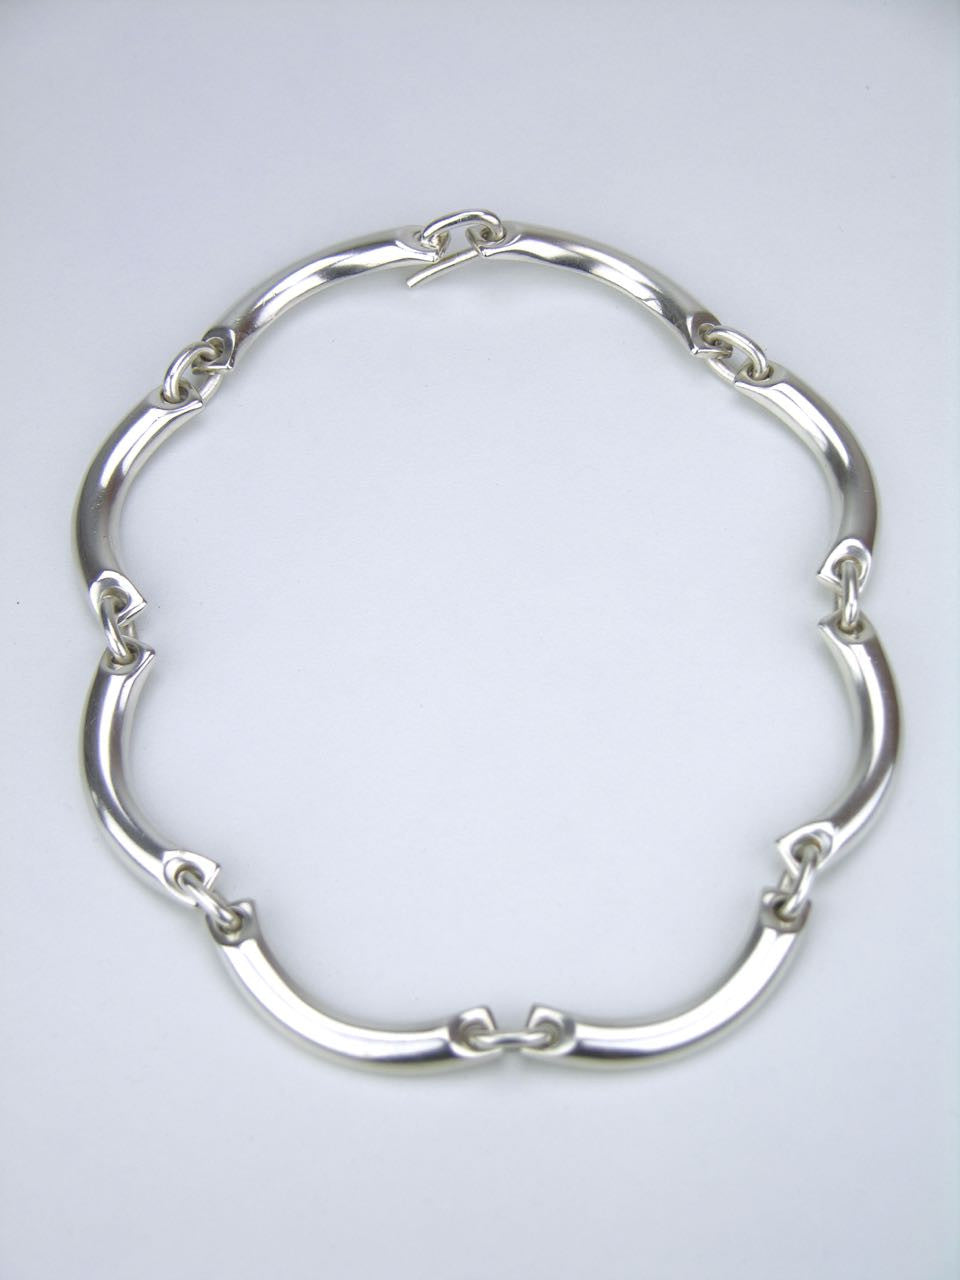 Georg Jensen segmented bar link necklace